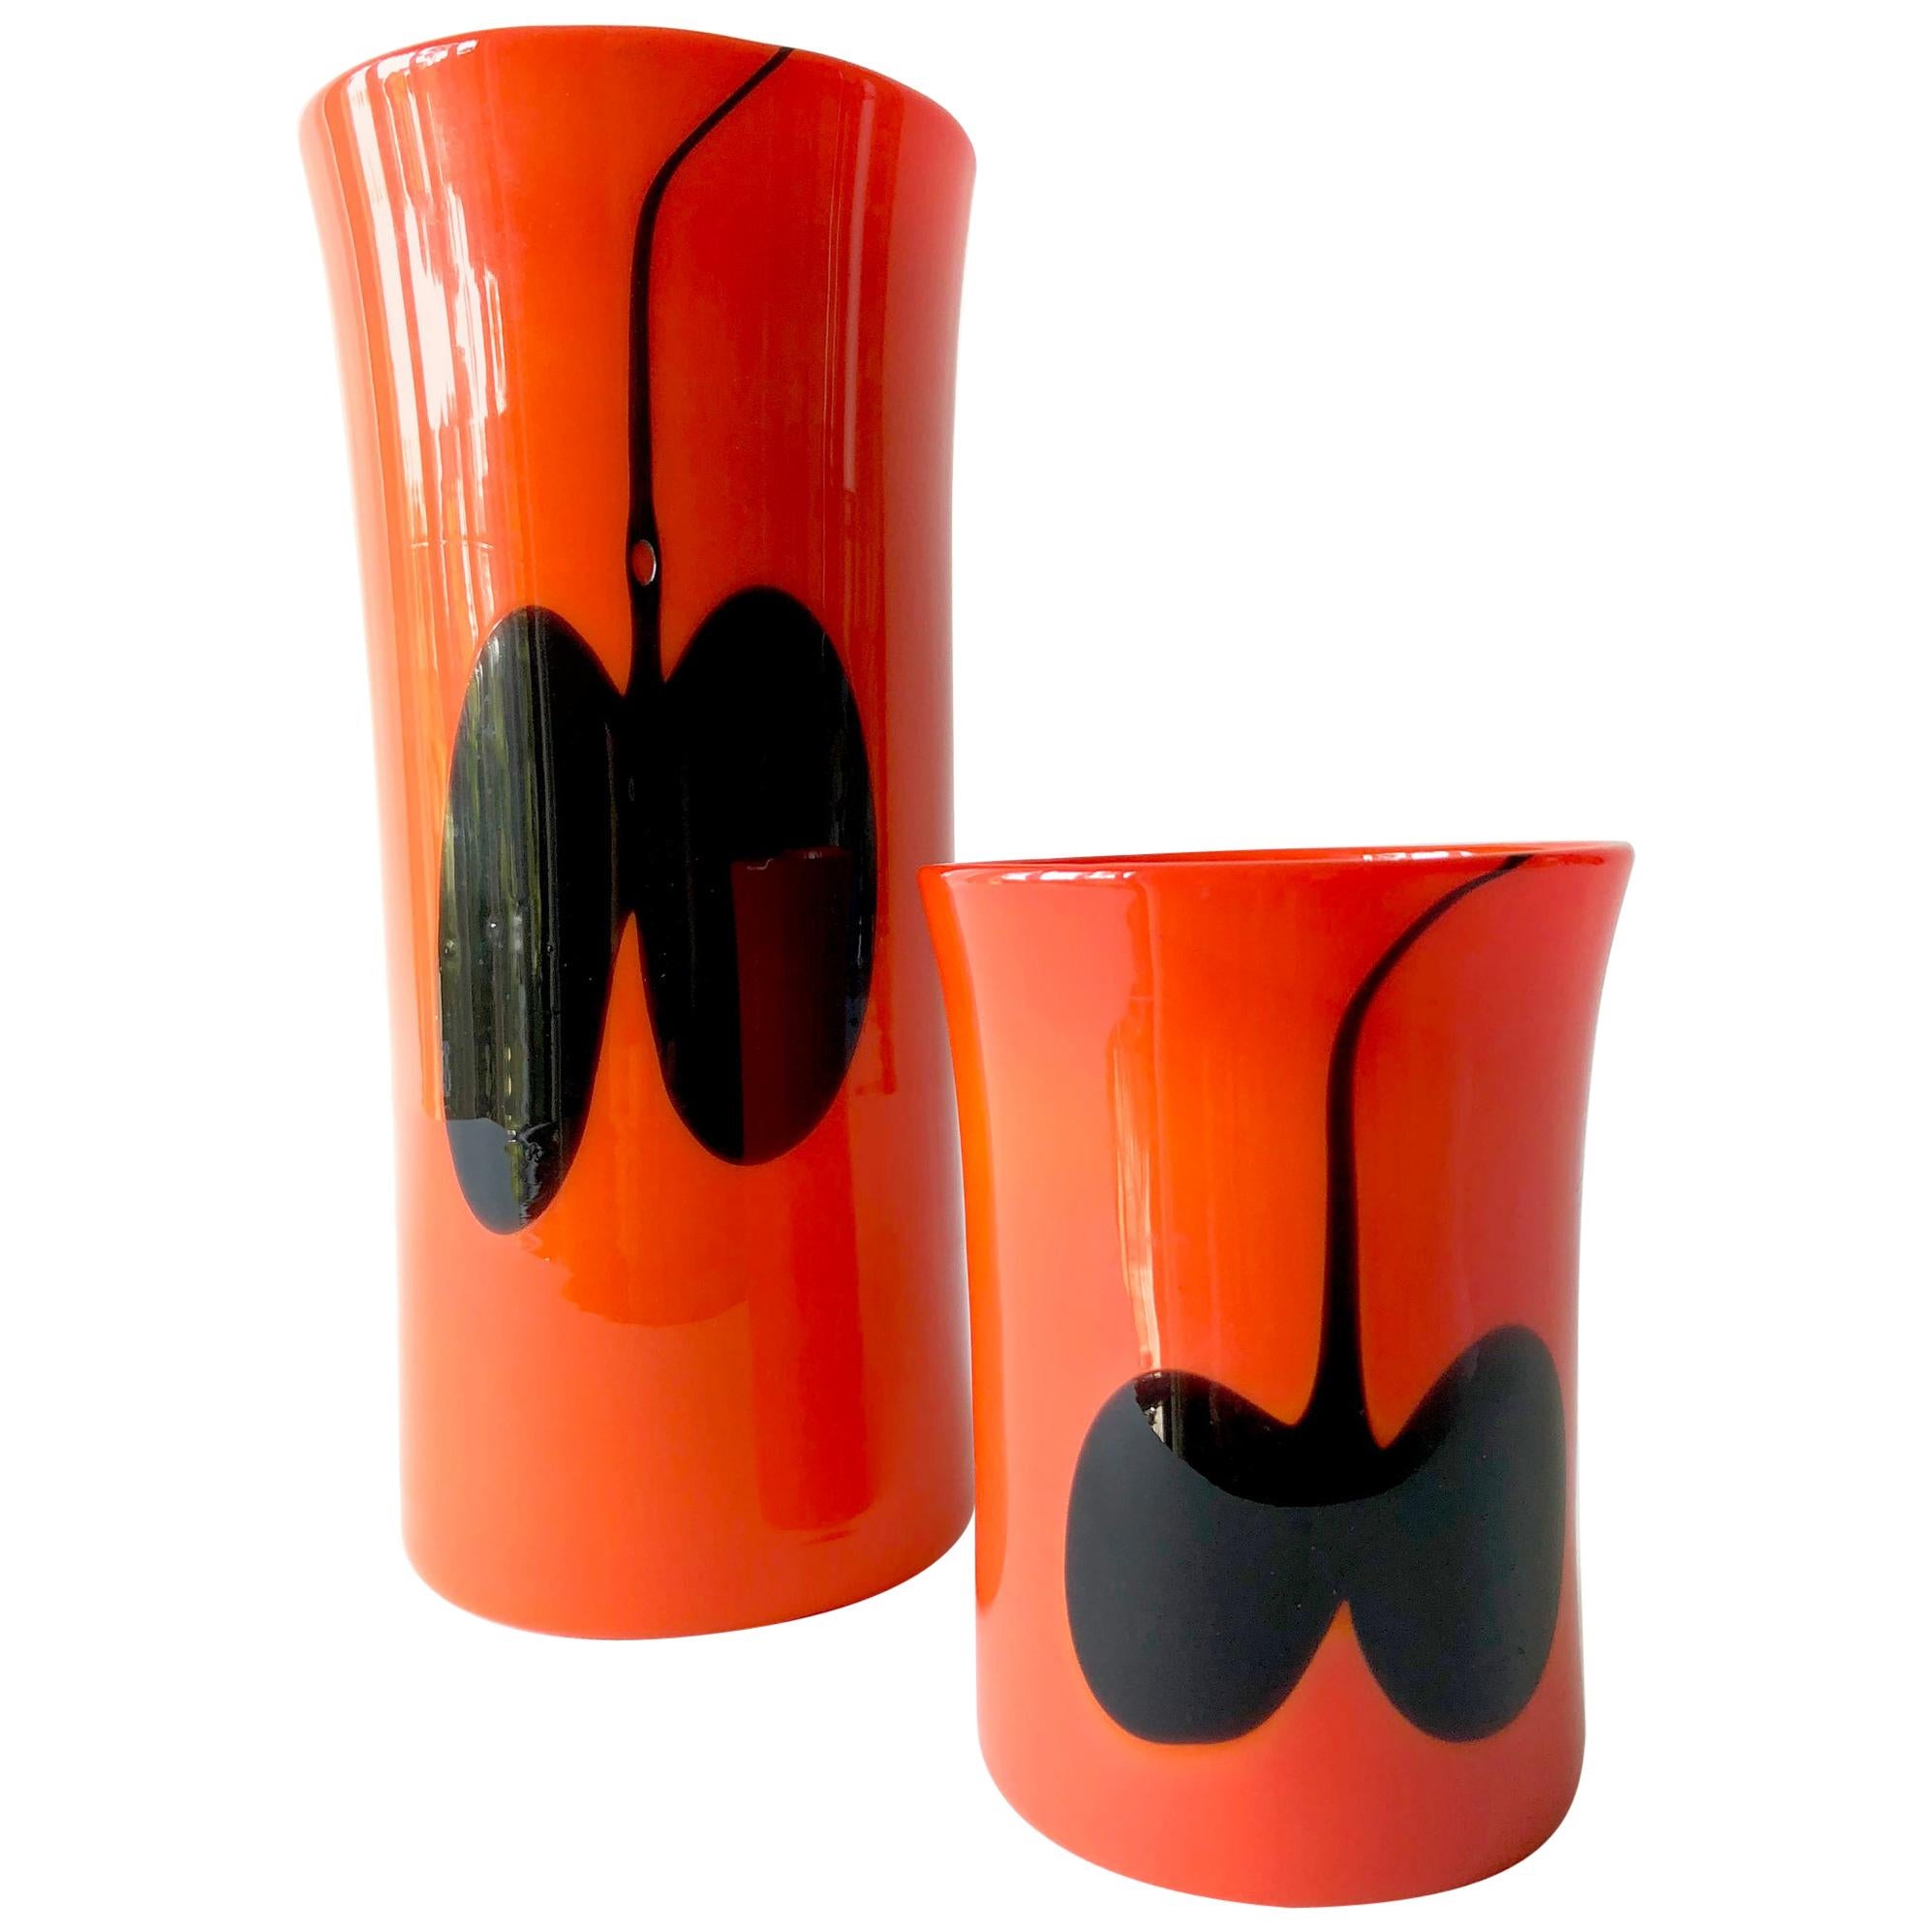 Heikki Orvola for Nuutajarvi Notsjo Finnish Modernist Glass Vases